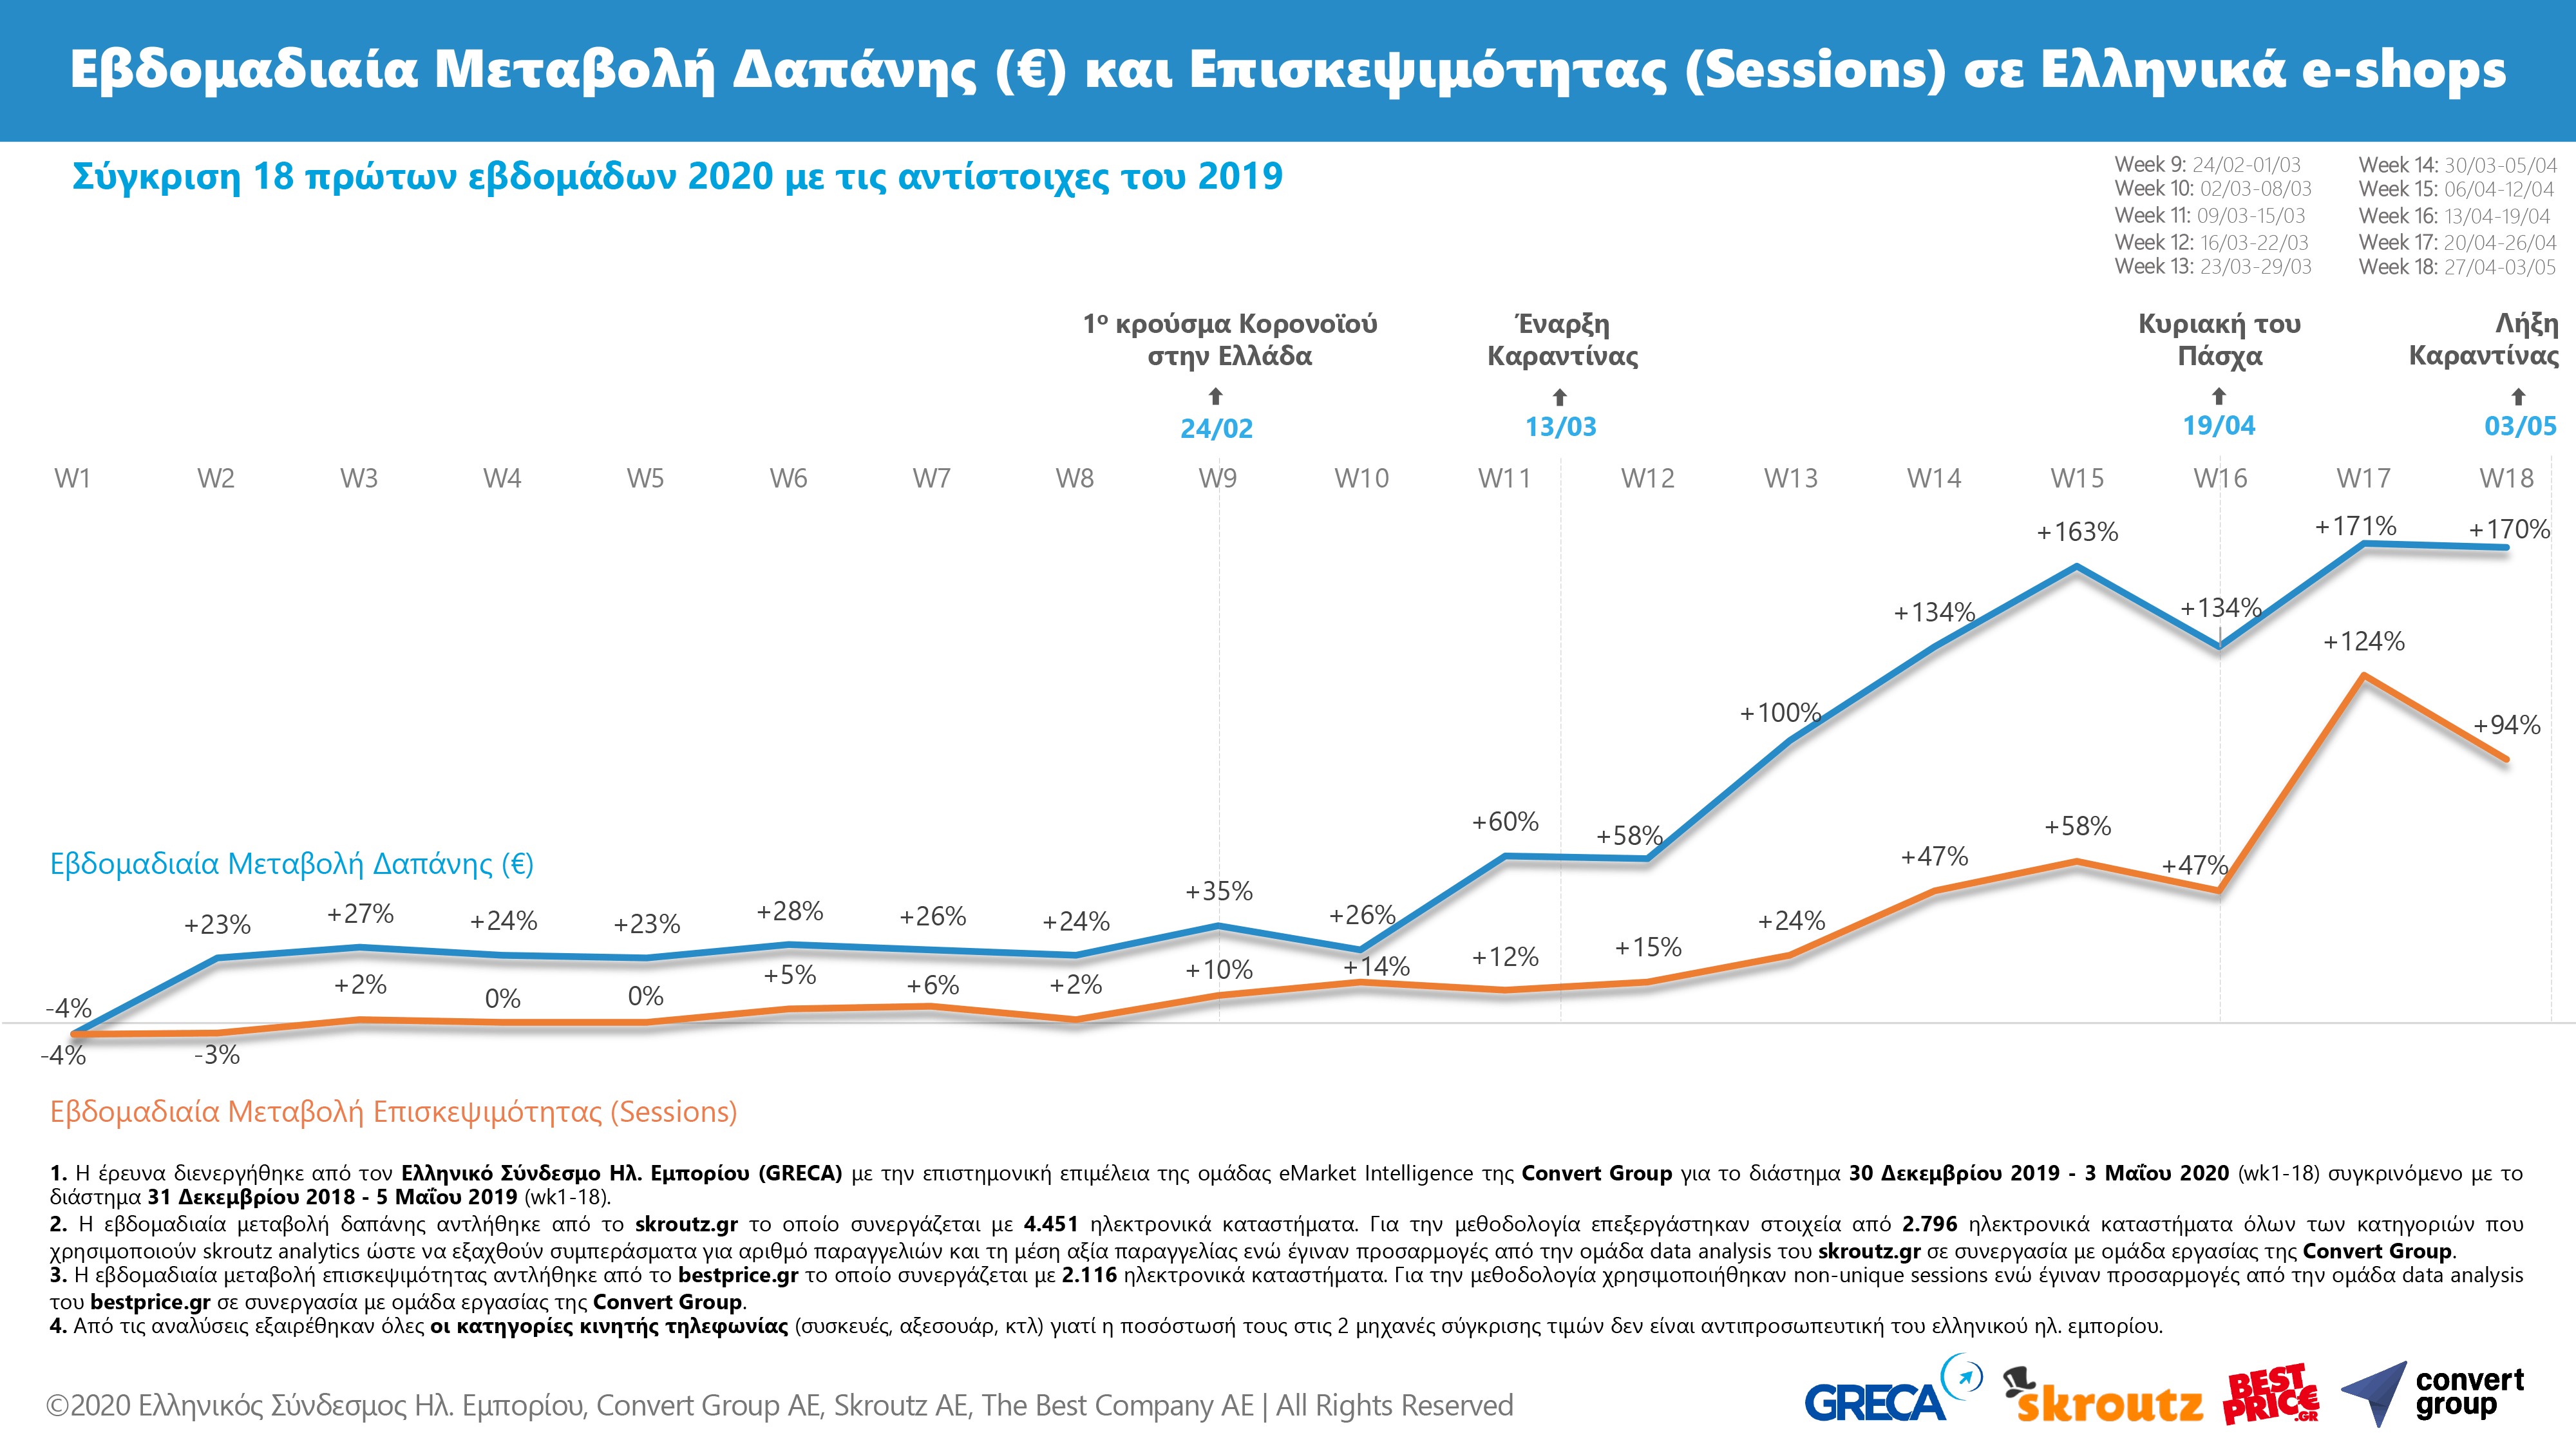 greek ecommerce wk18 2020 revenues and visits | Techlog.gr - Χρήσιμα νέα τεχνολογίας